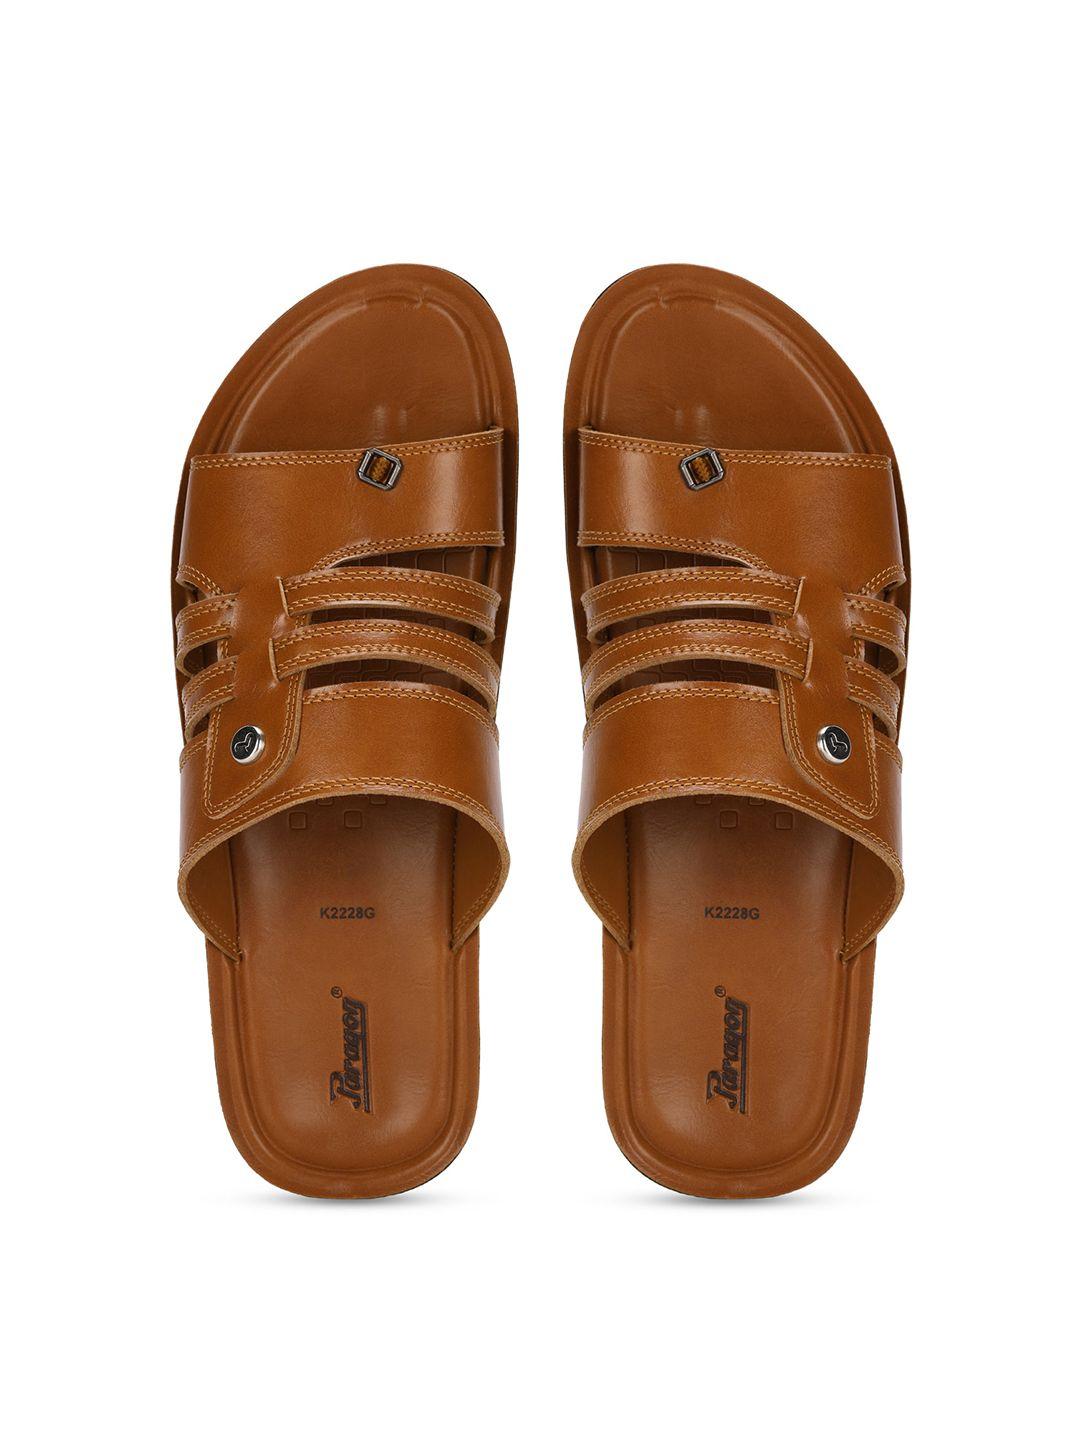 paragon-men-anti-skid-sole-&-sturdy-construction-comfort-sandals